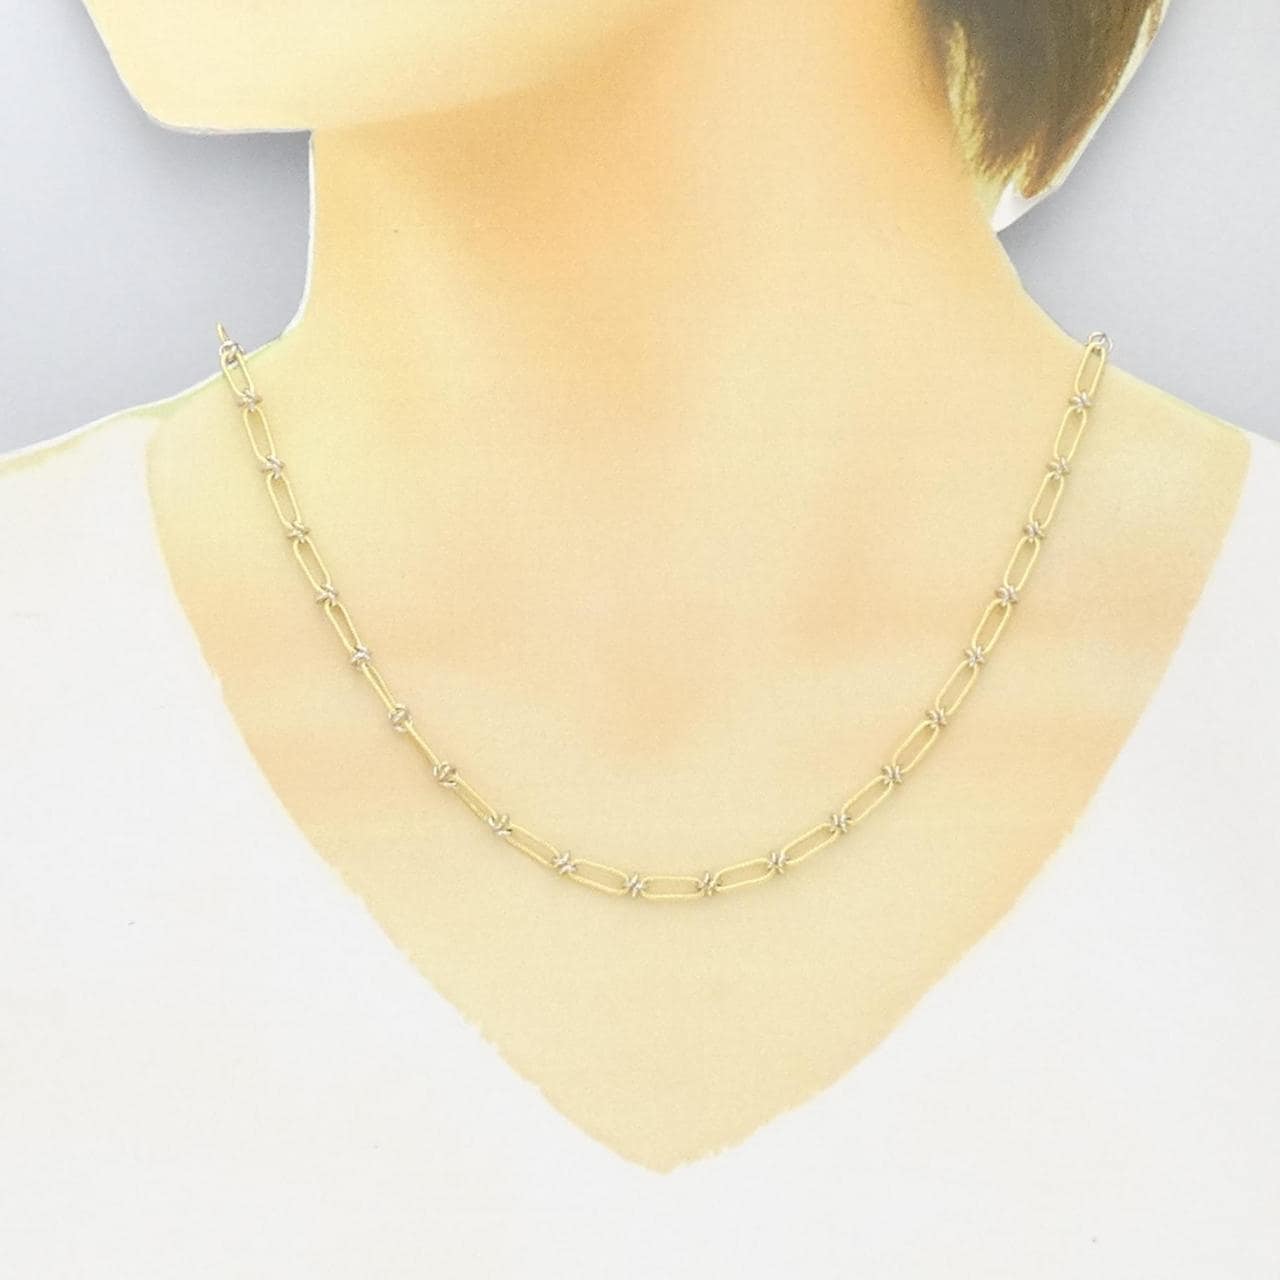 750YG/750WG necklace